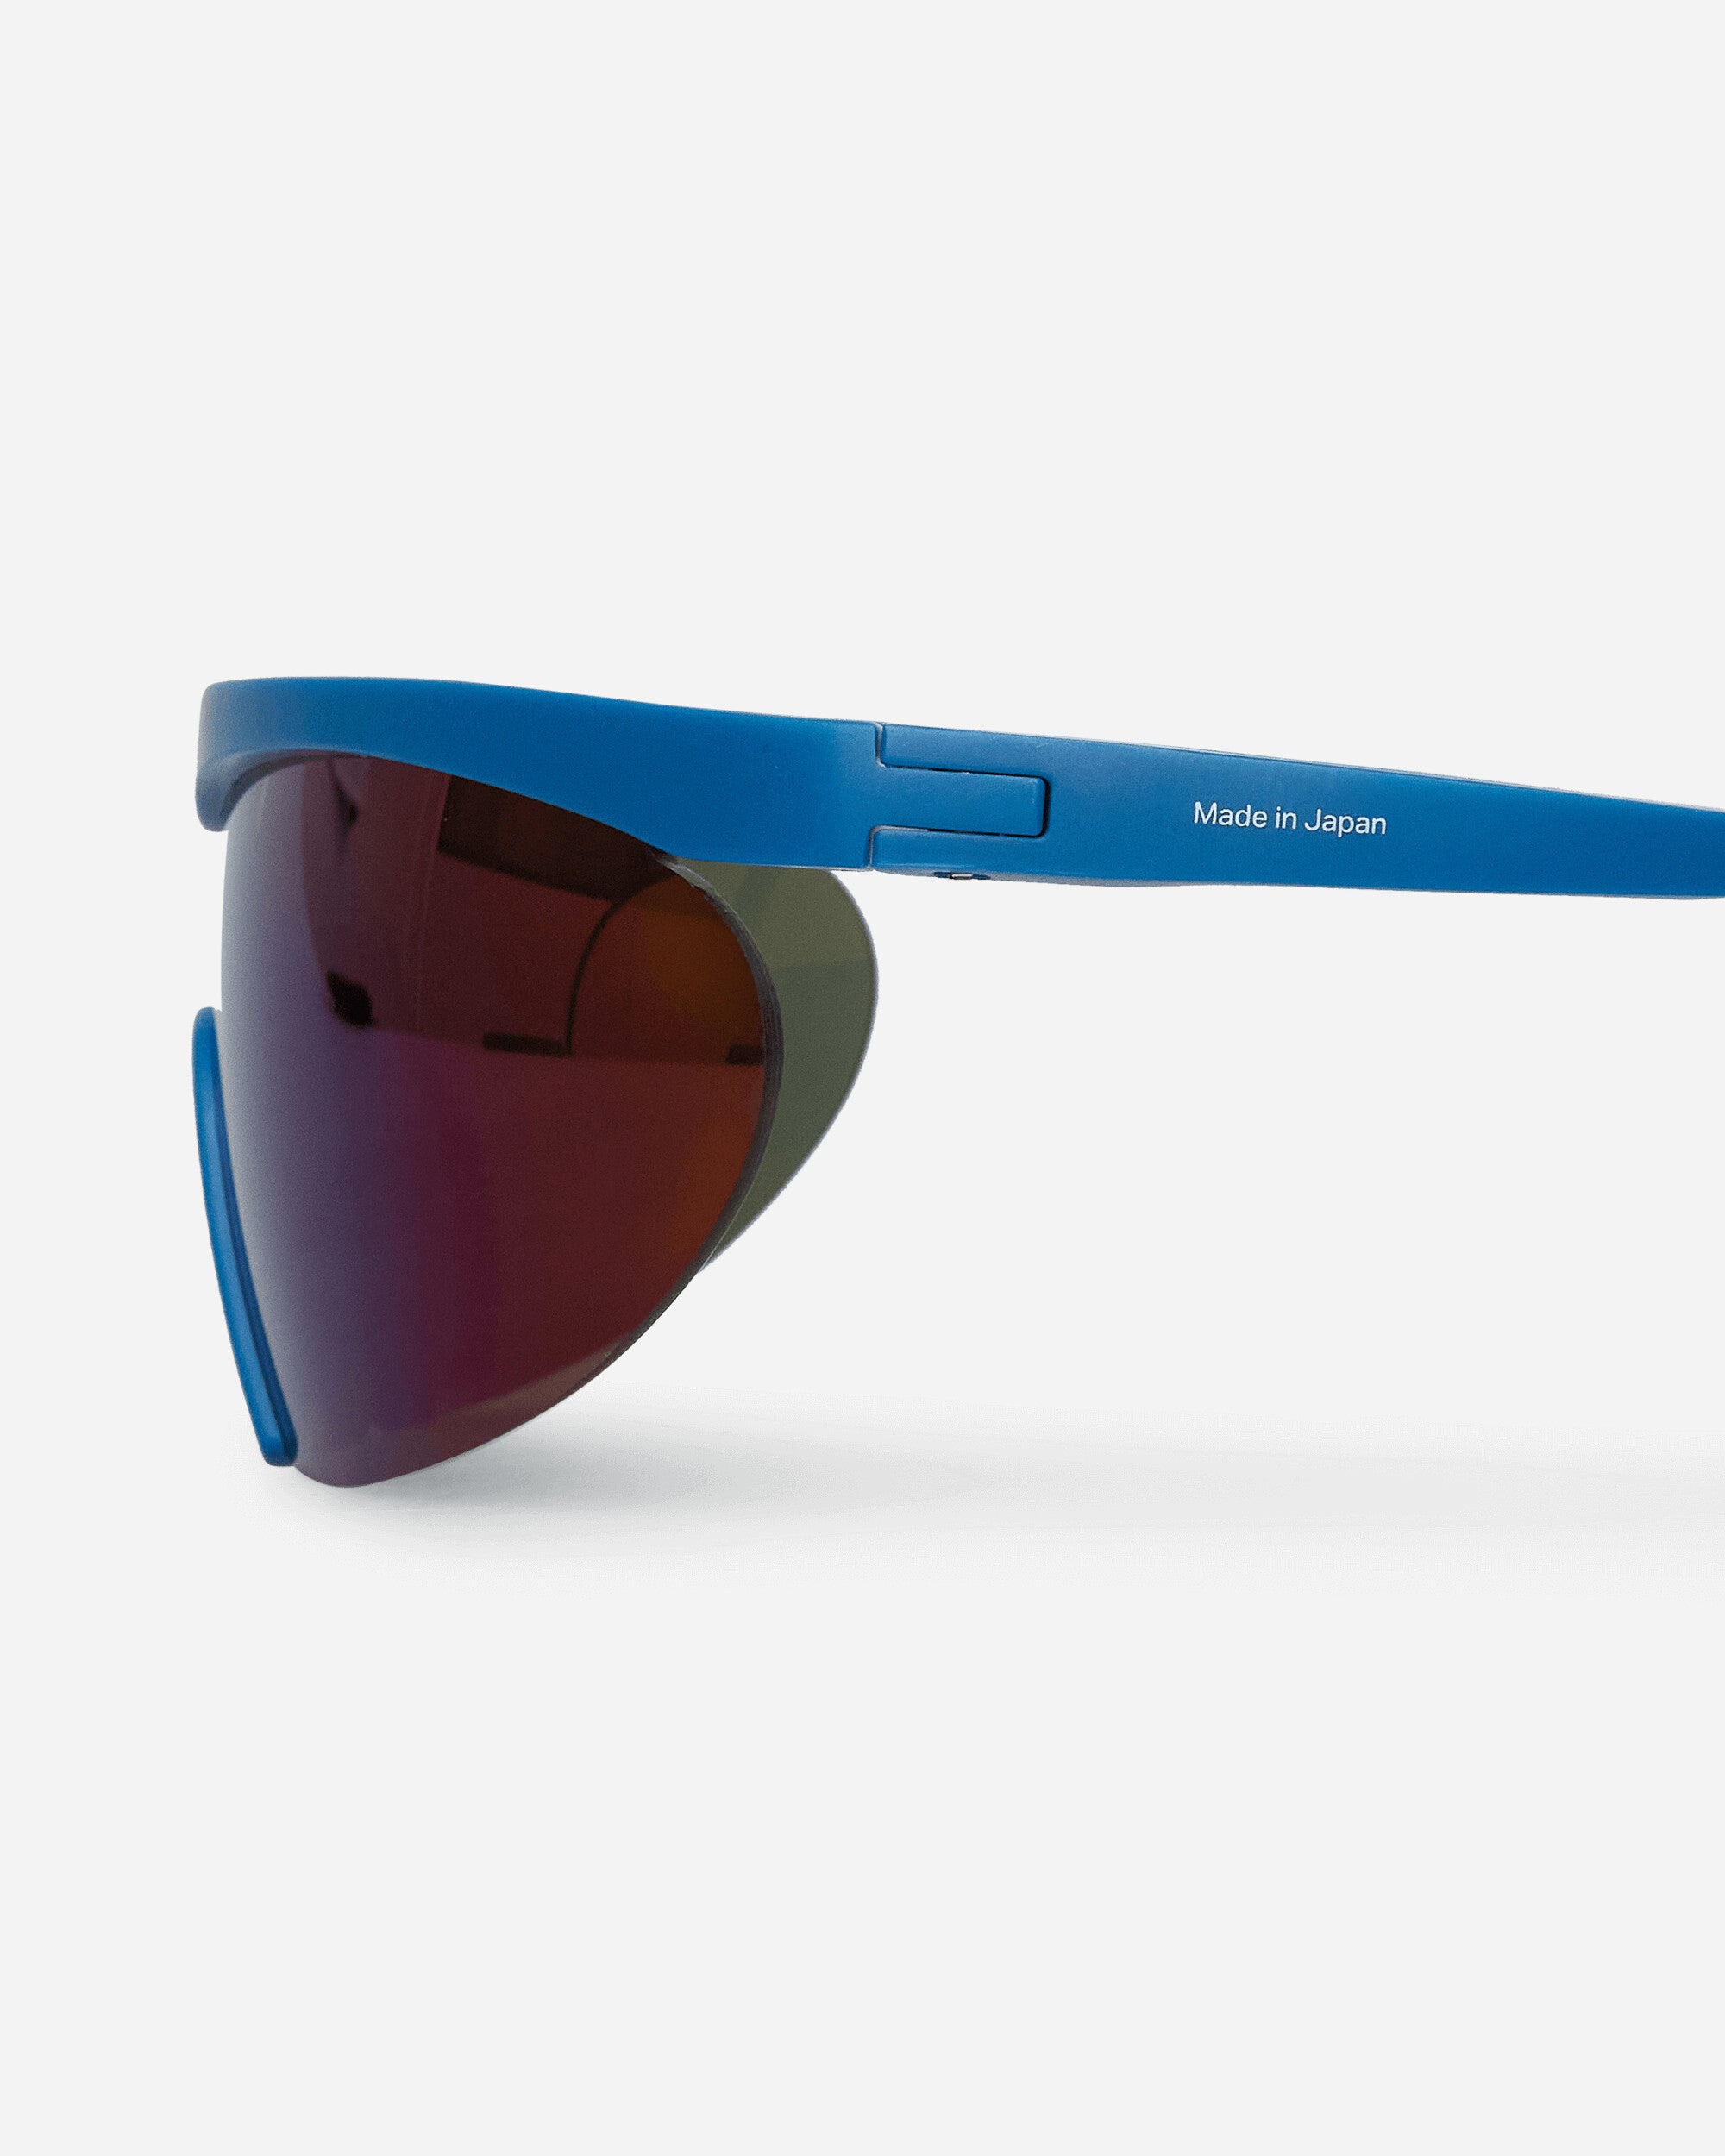 District Vision Koharu Eclipse Ocean Blue/Indigo Eyewear Sunglasses DVG005 O